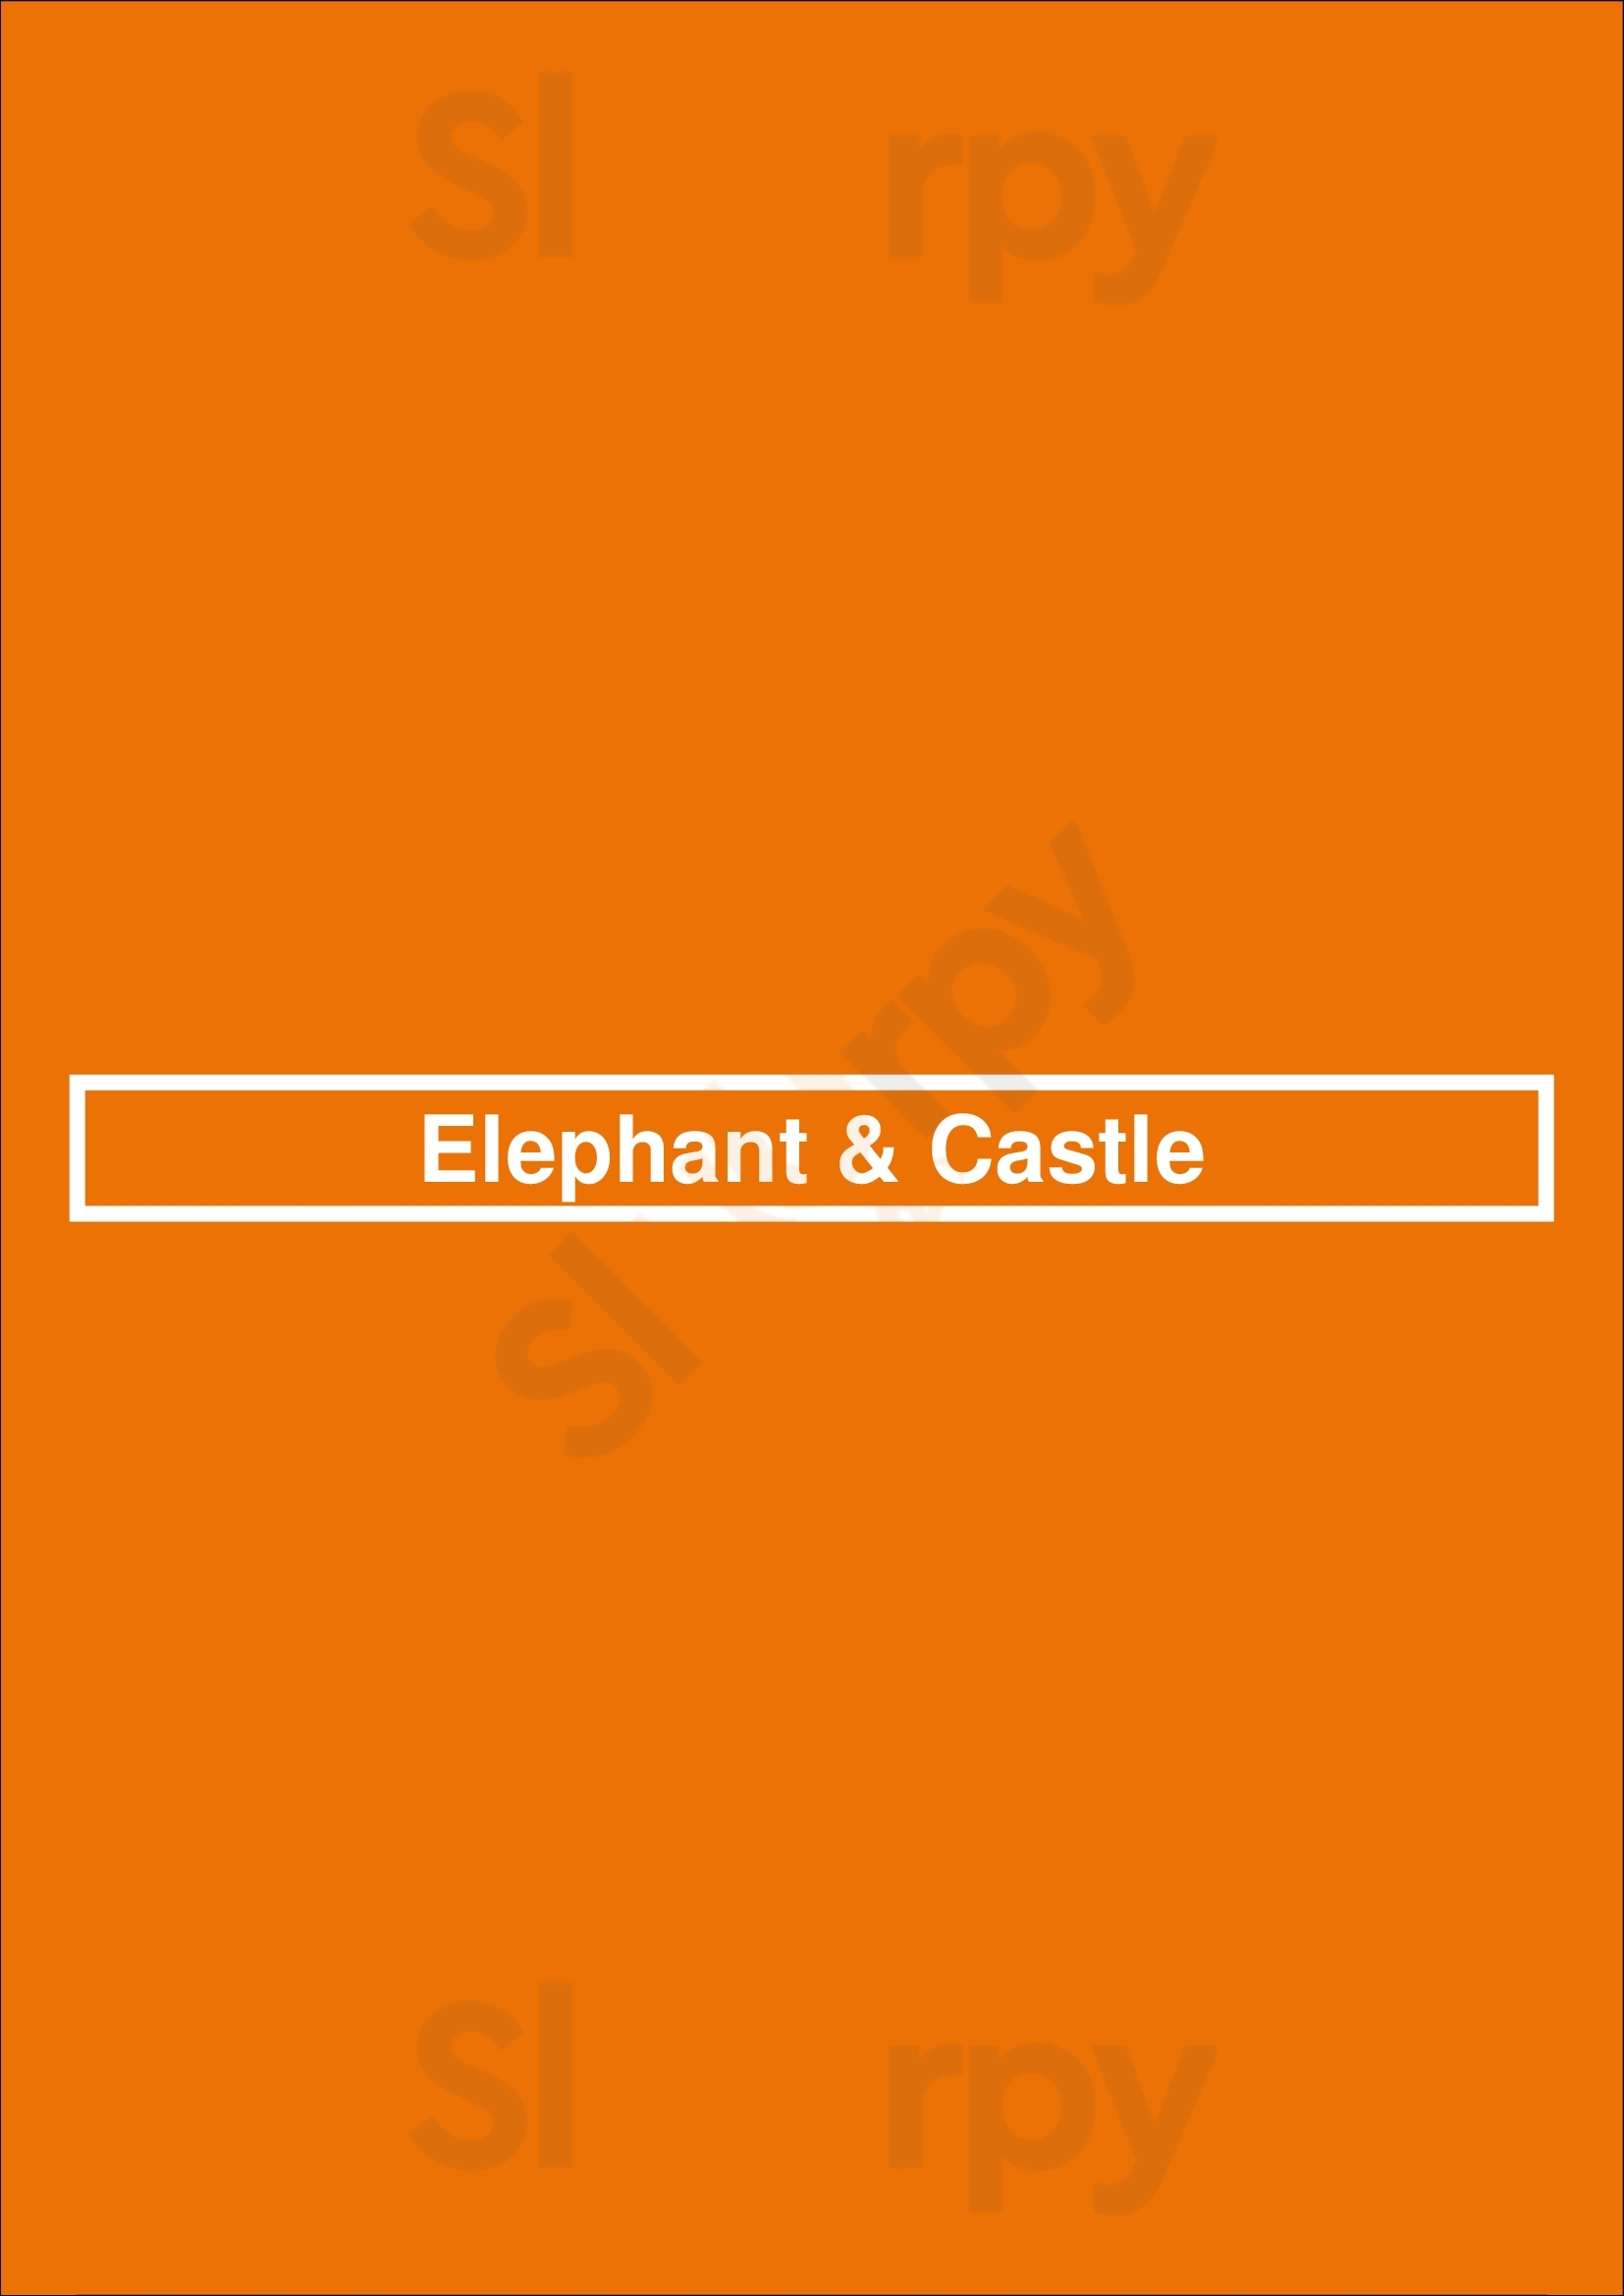 Elephant & Castle Boston Menu - 1